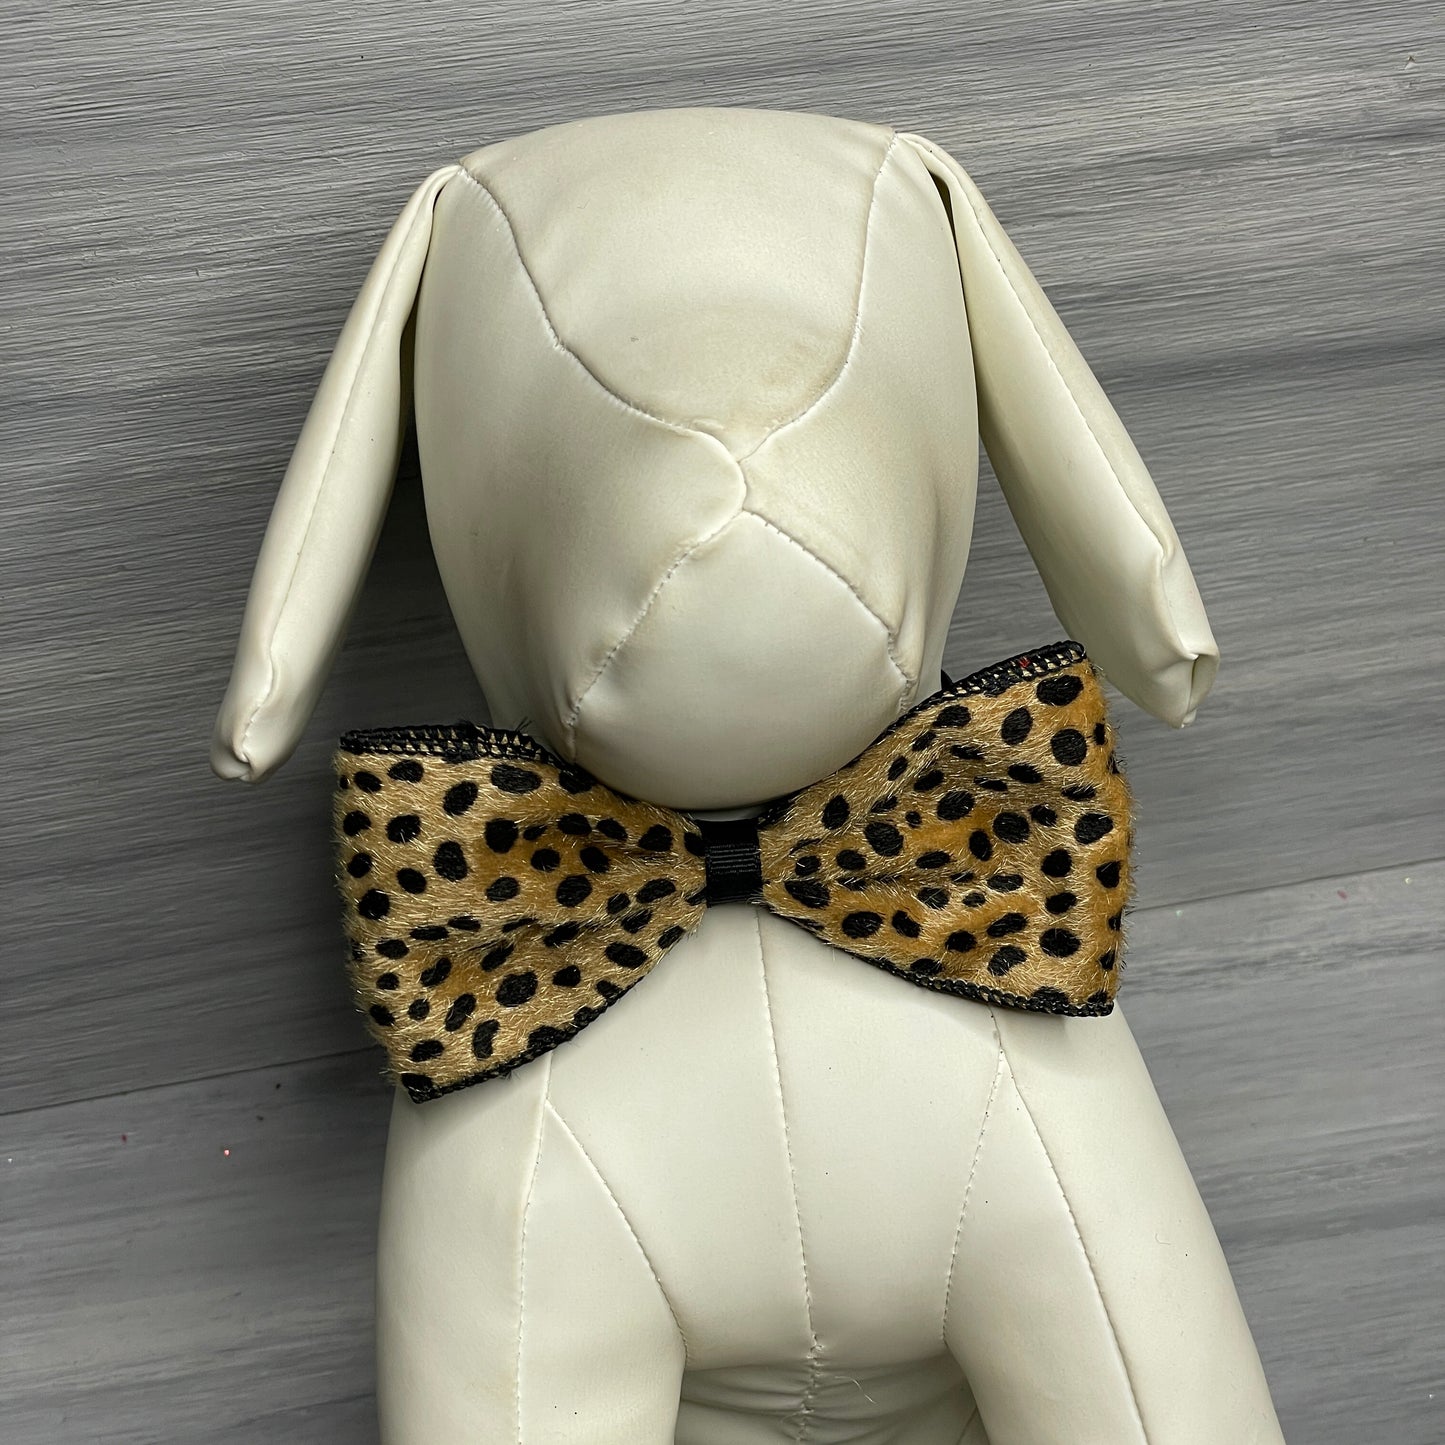 Cheetah Delight - XL Bow Tie - 2 Extra Large Neckties